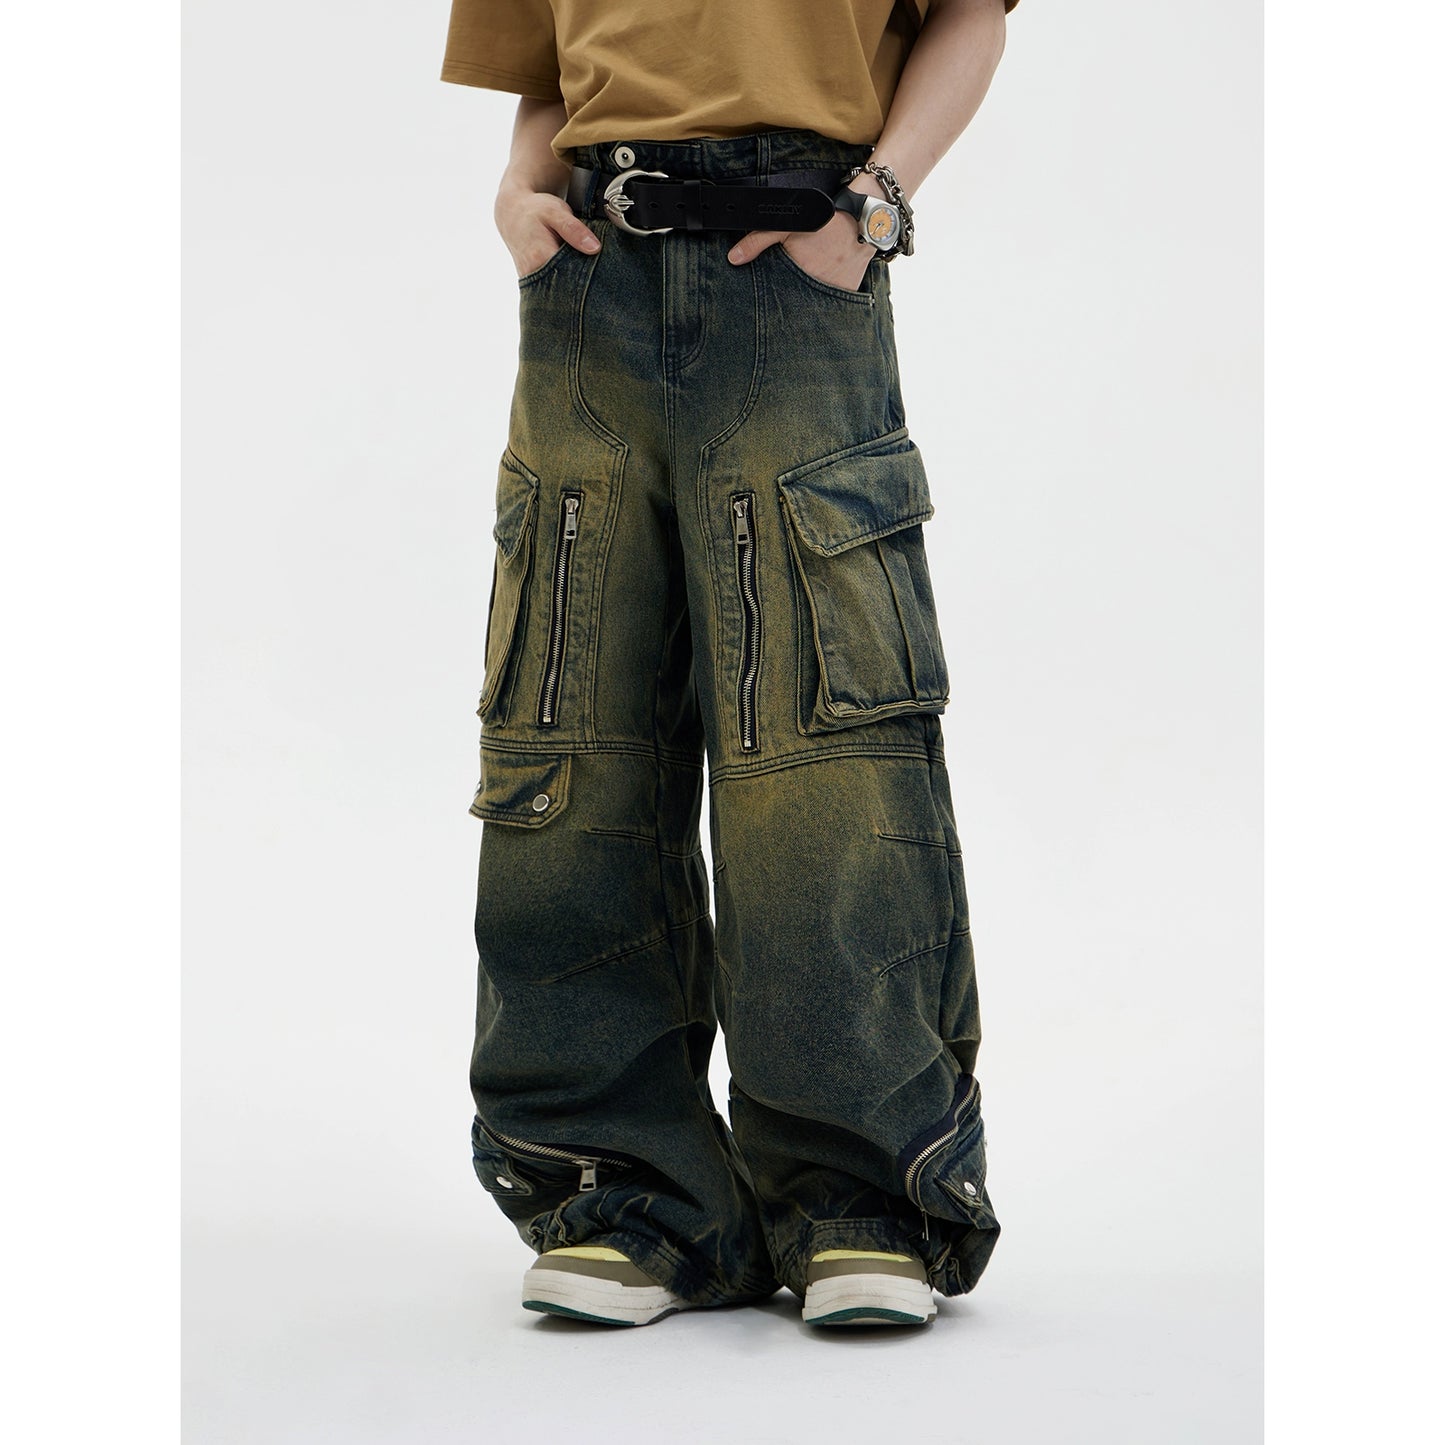 Retro Distressed - Multi Pocket Workwear Pants